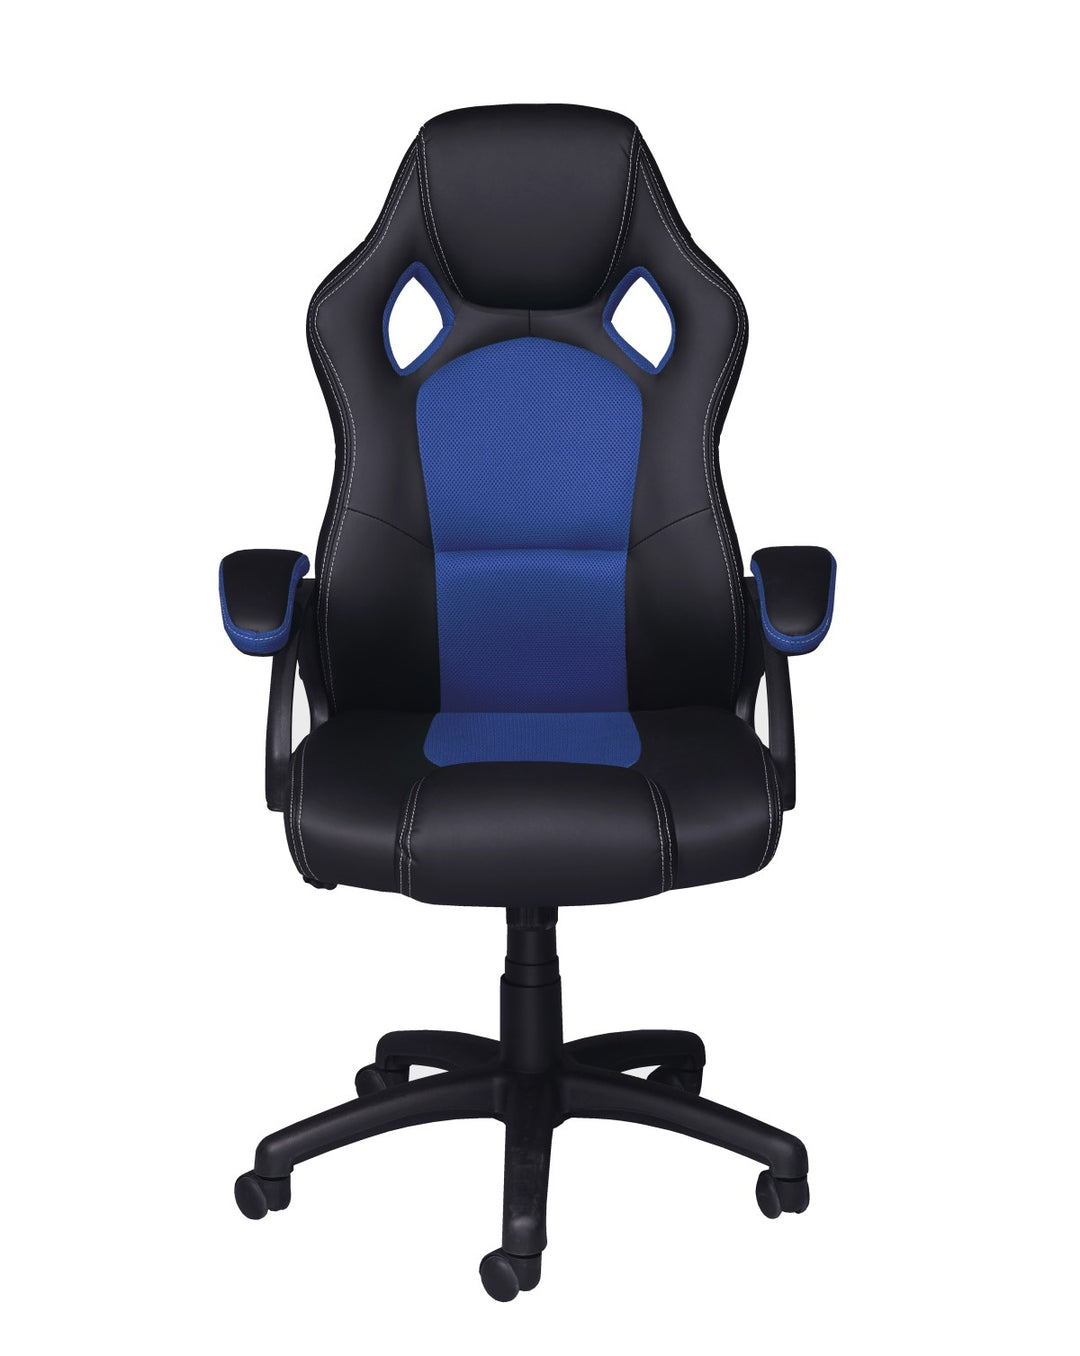 Black/Blue Ergonomic Design Gaming Chair | Breathable Fabric/Mesh & 360-Degree Maneuverability